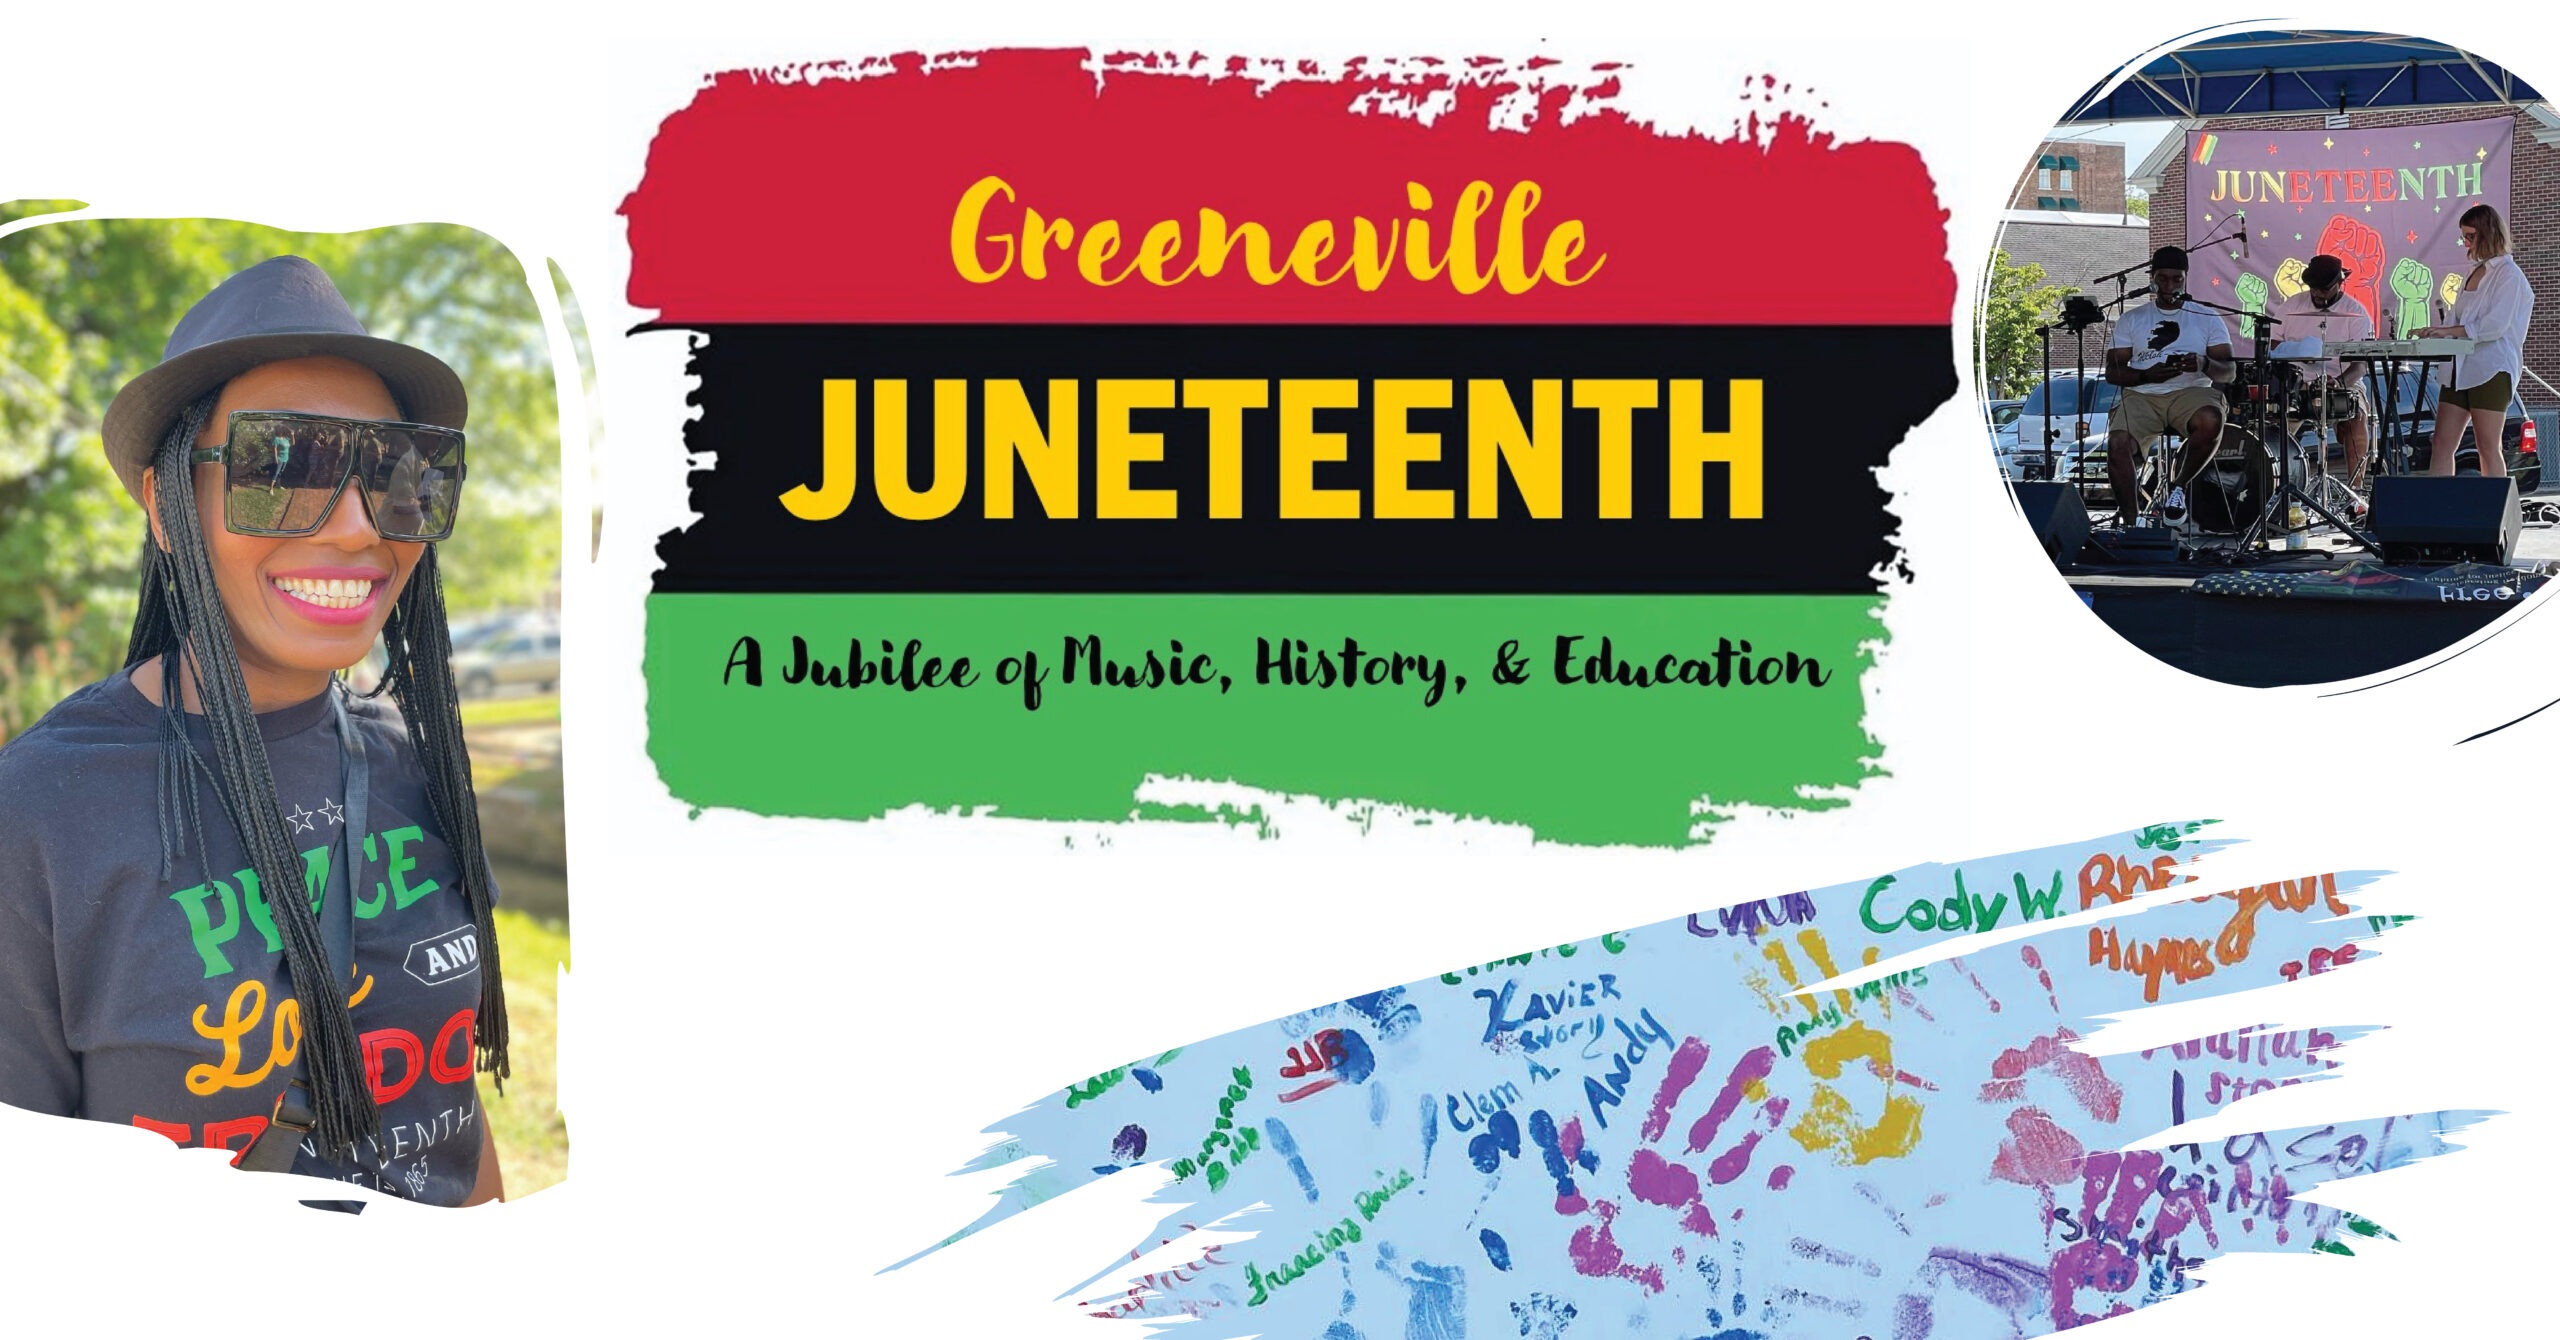 Greeneville’s 2nd Annual Juneteenth Celebration